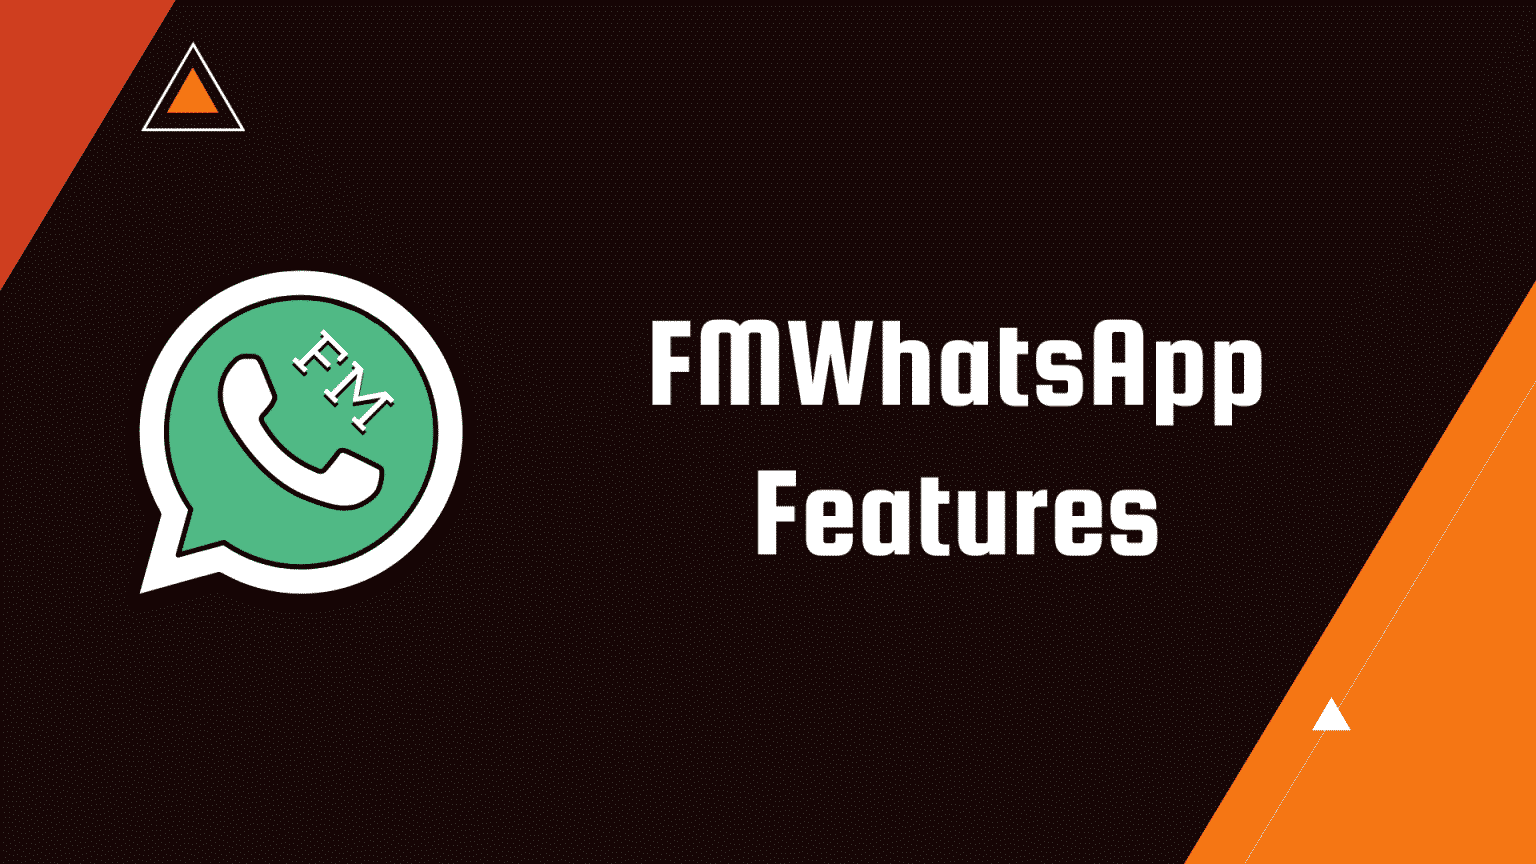 fm whatsapp download 2021 new version 8.40